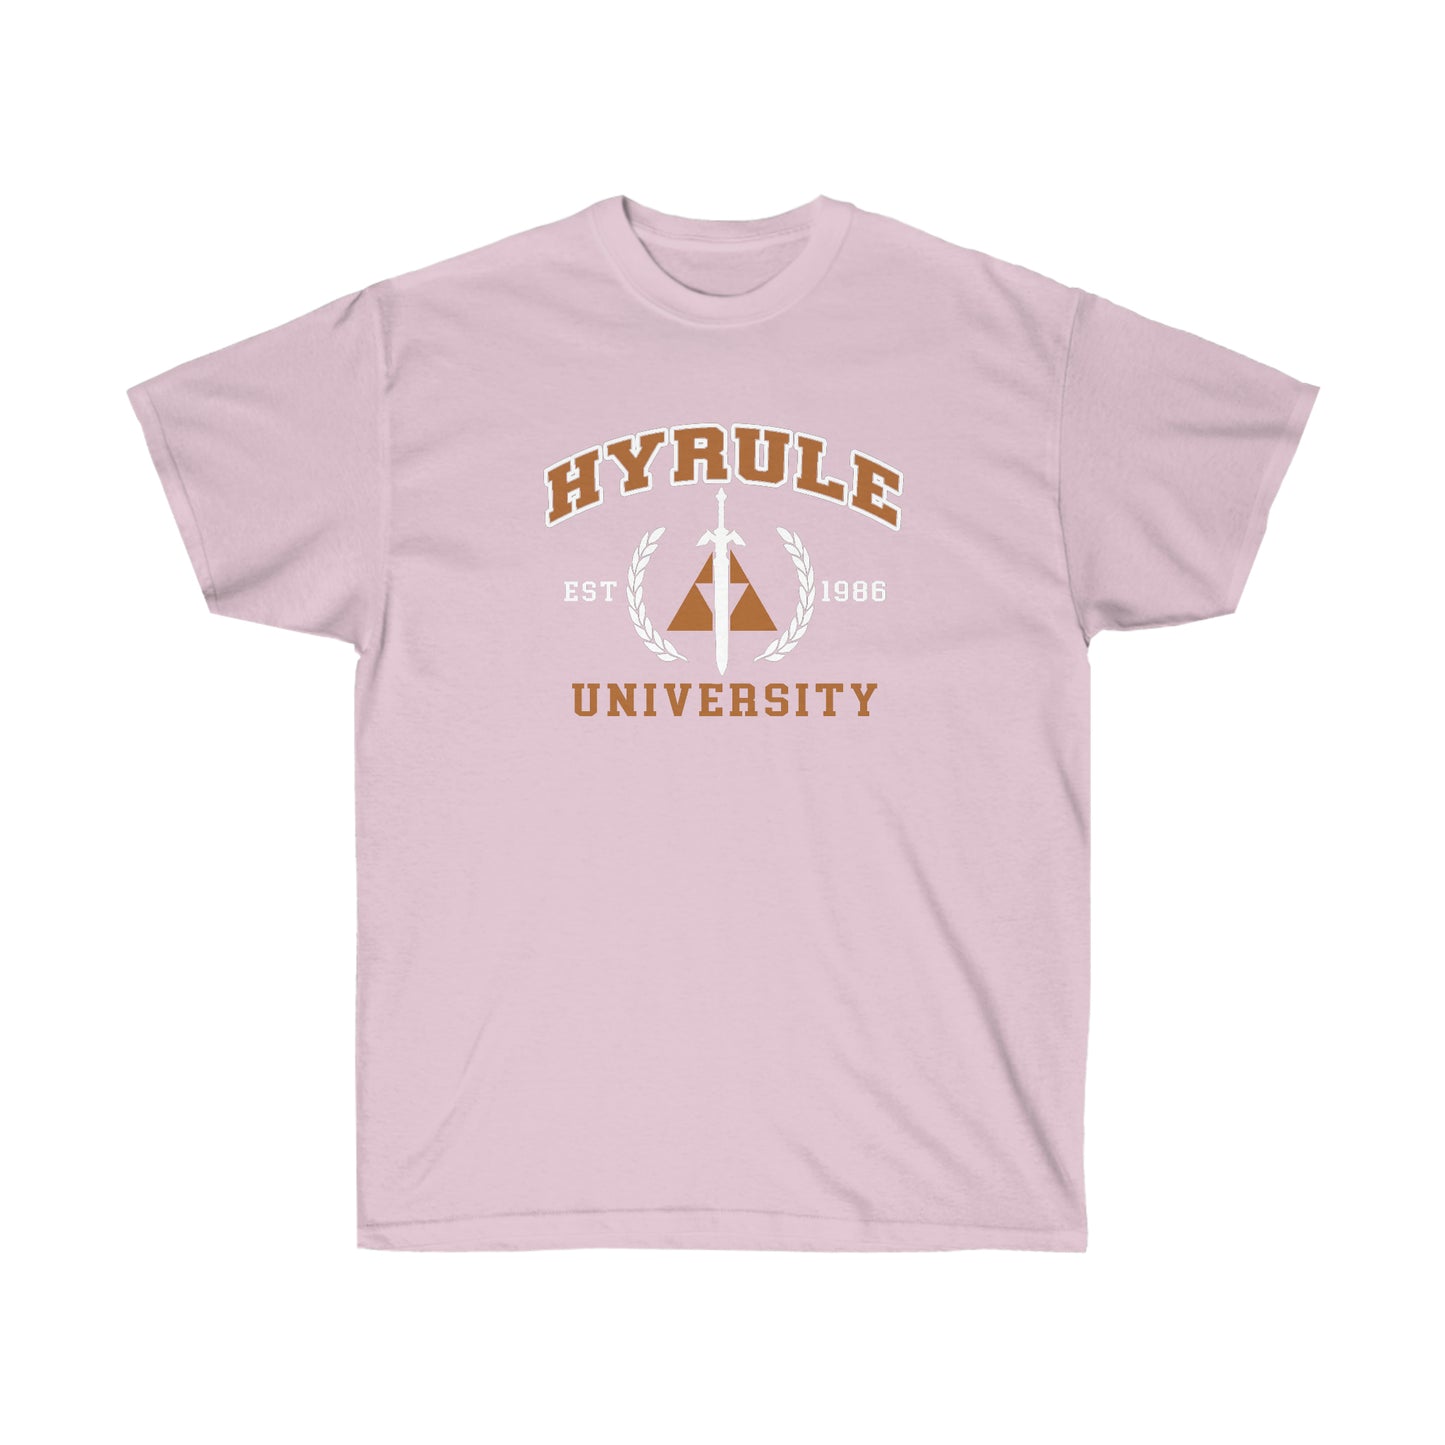 Legend of University shirt